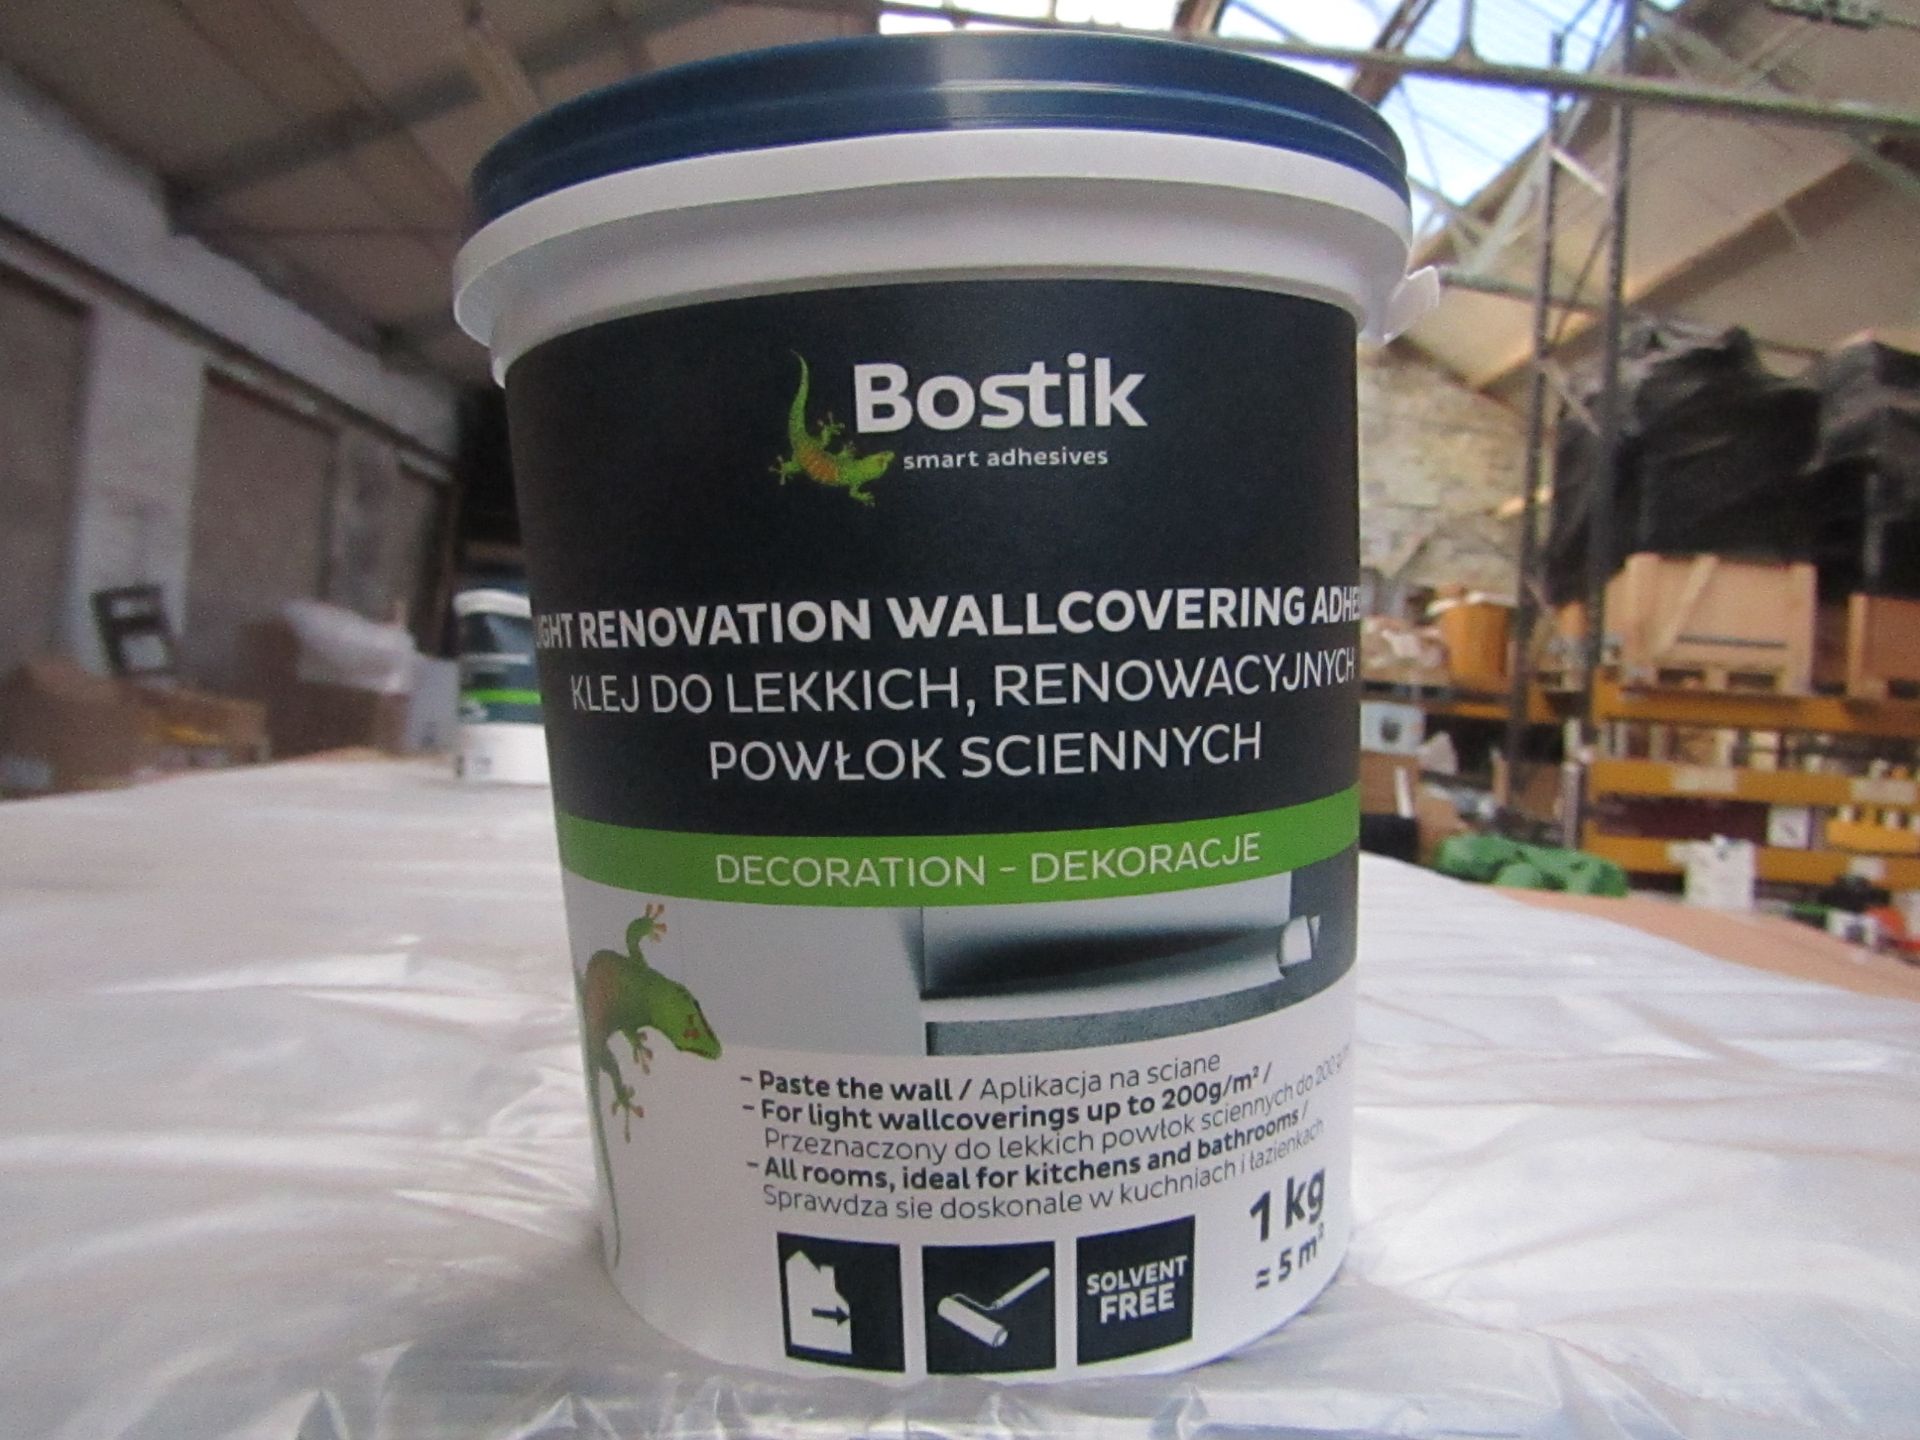 4x Bostik - Light Renovation Wallcovering Adhesive (Solvent Free) (1KG Tub = 5MSquared) - New &